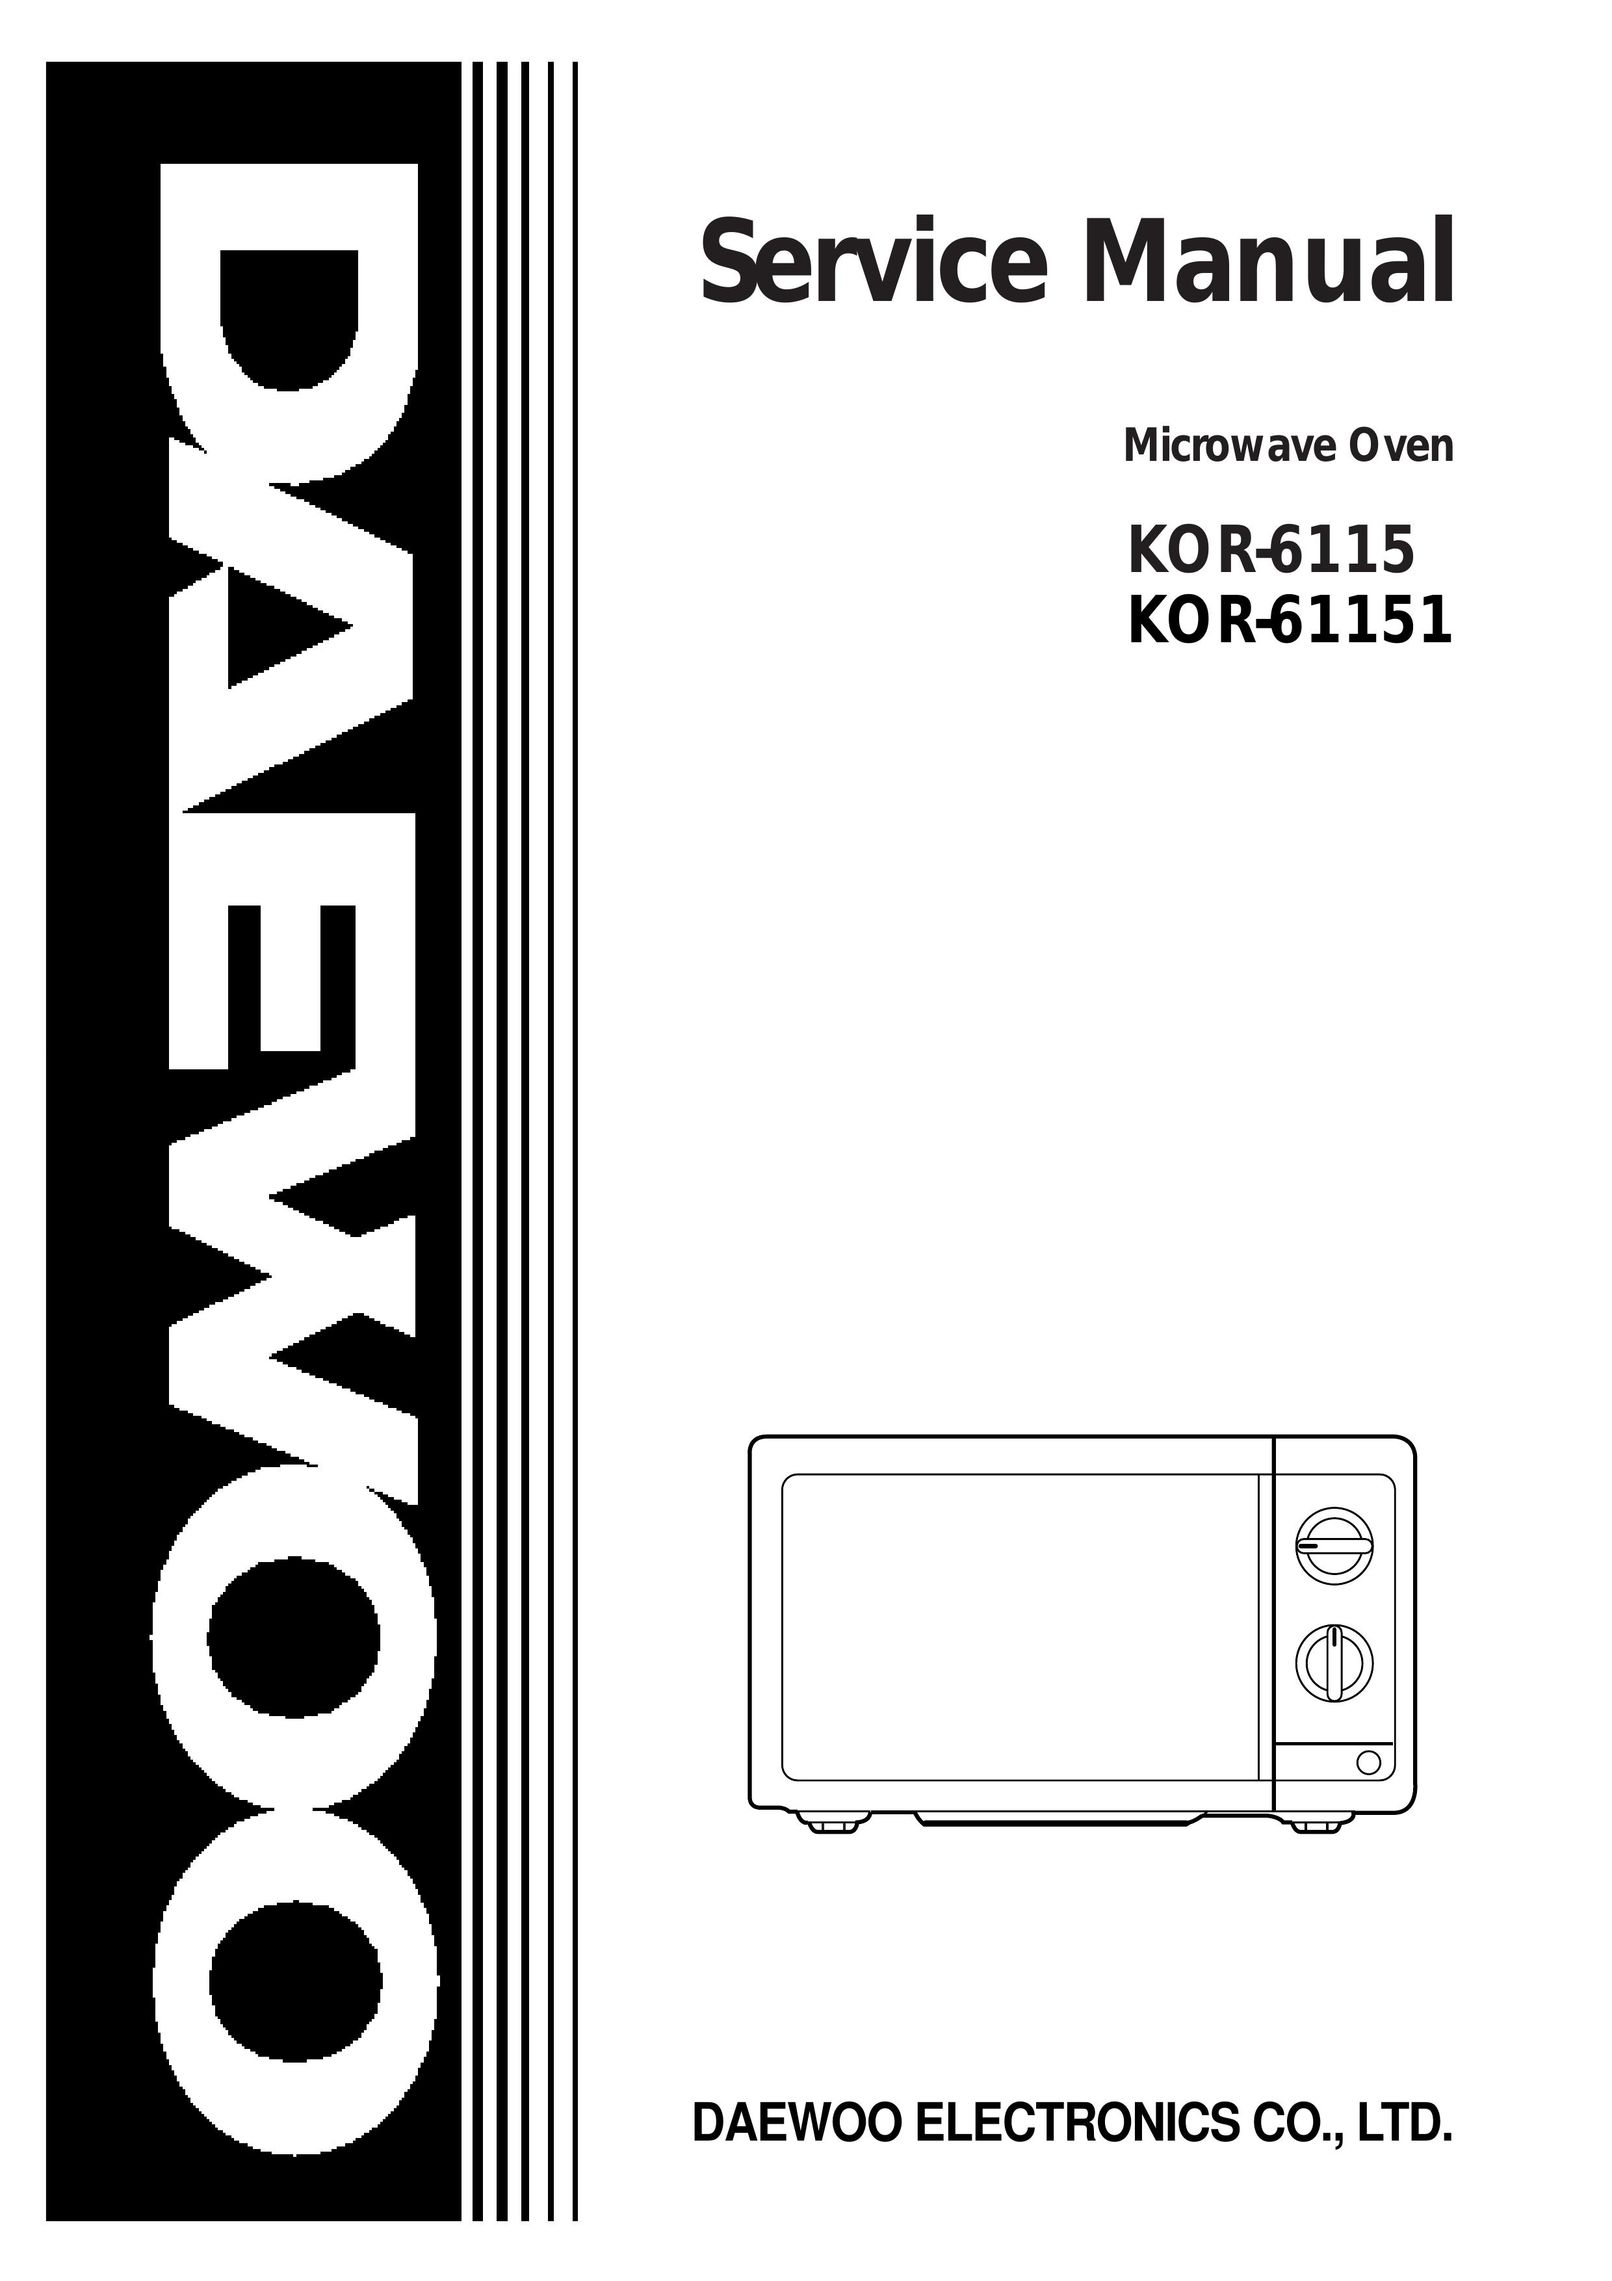 Daewoo KOR-61155 Microwave Oven User Manual